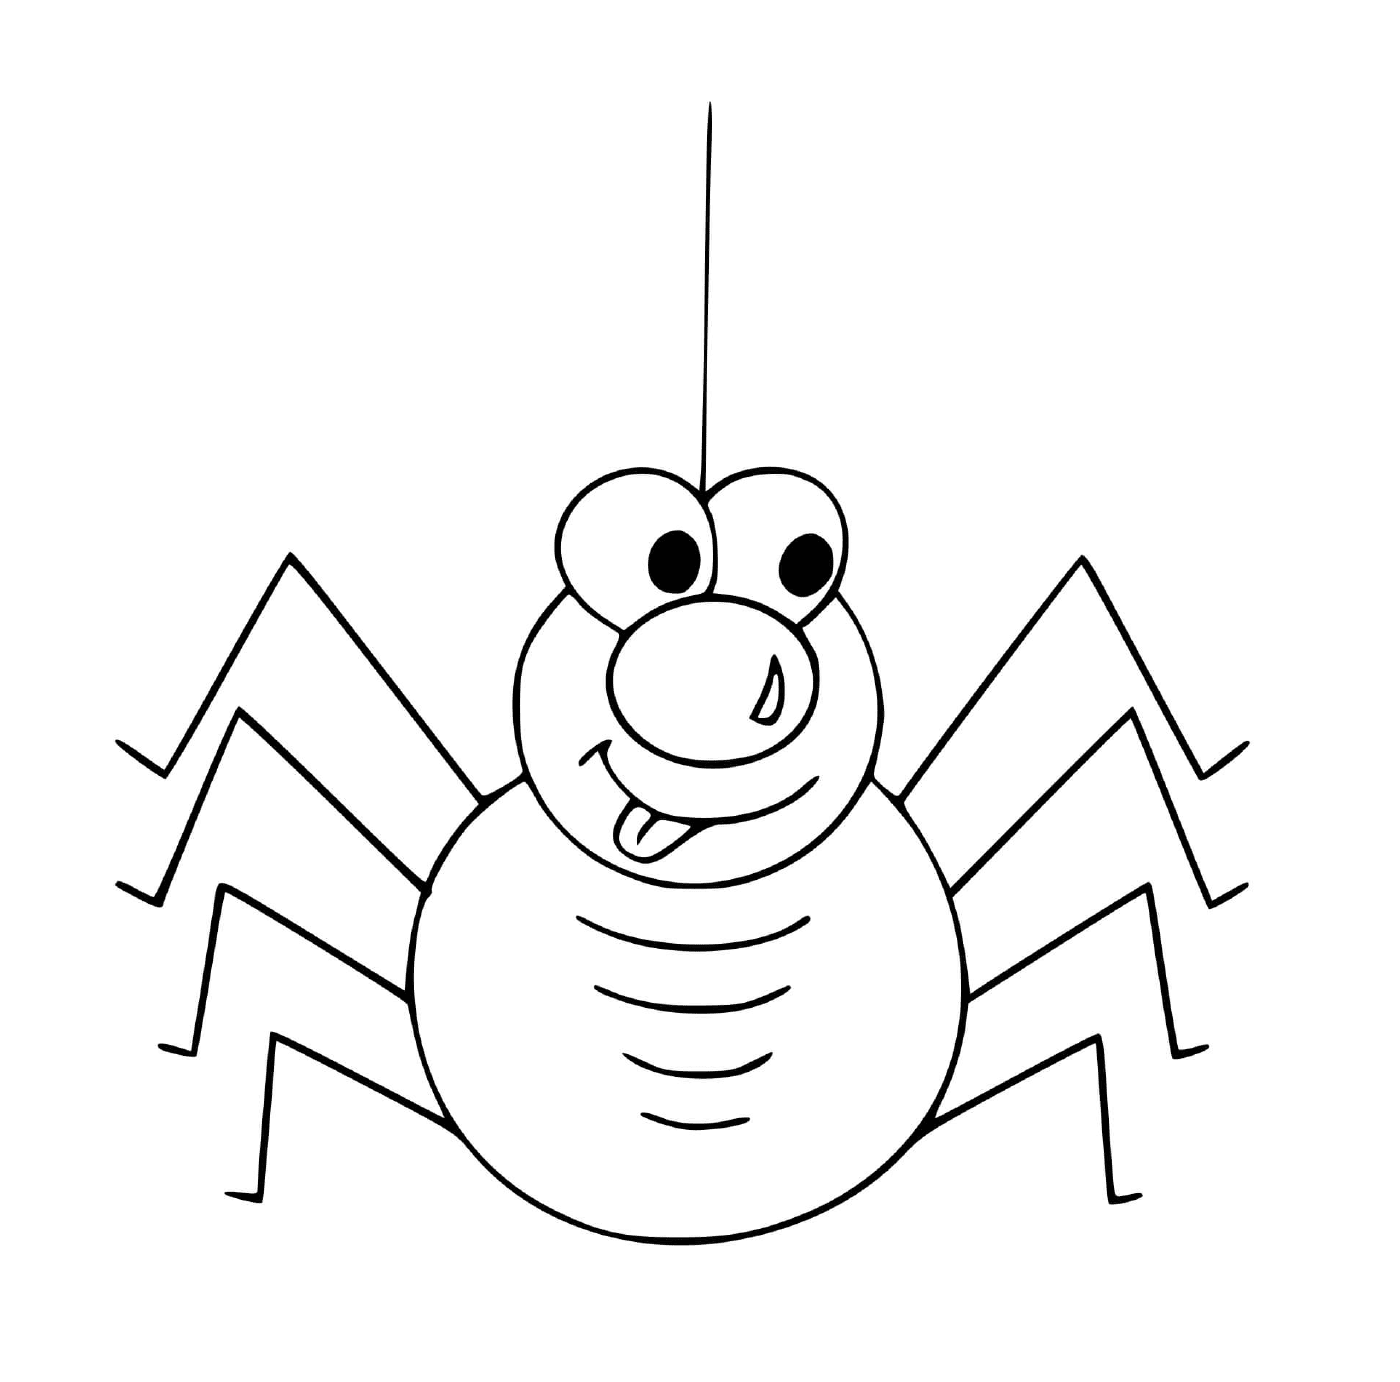   Une araignée souriante 